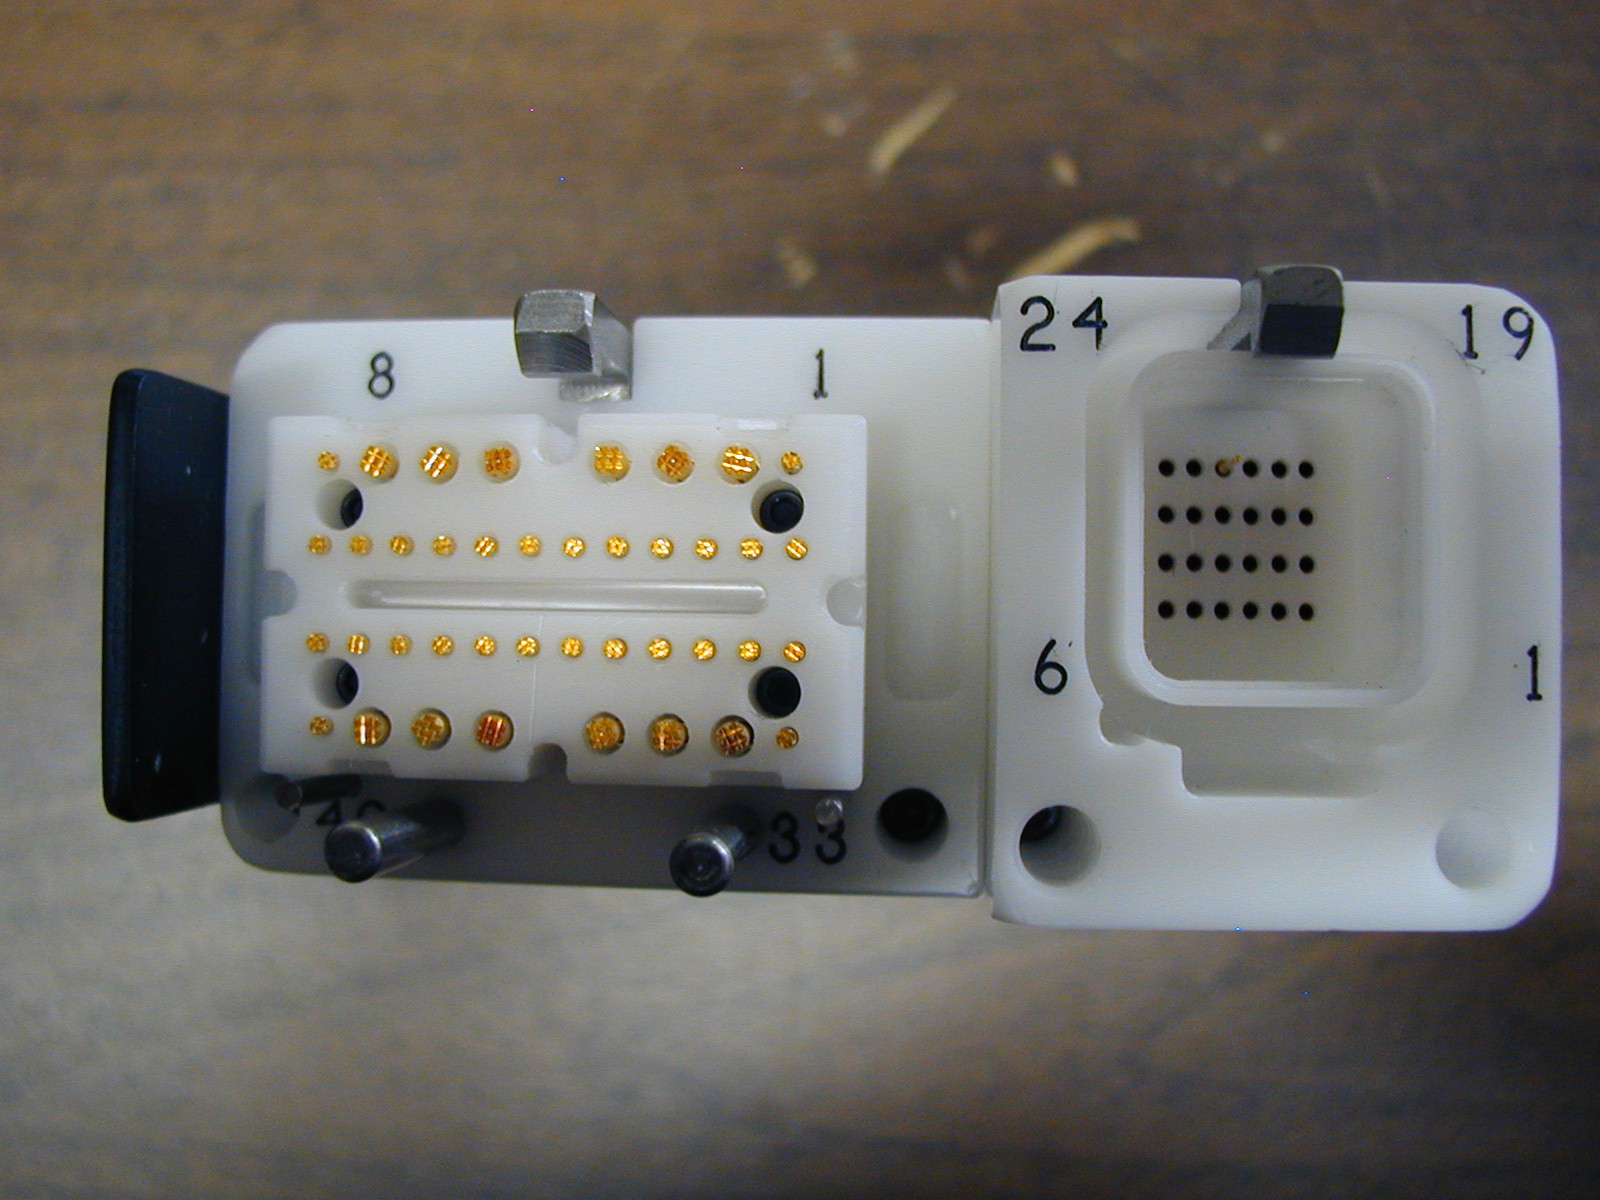 Test Plug example. 2in1 plug - 40way and 24way